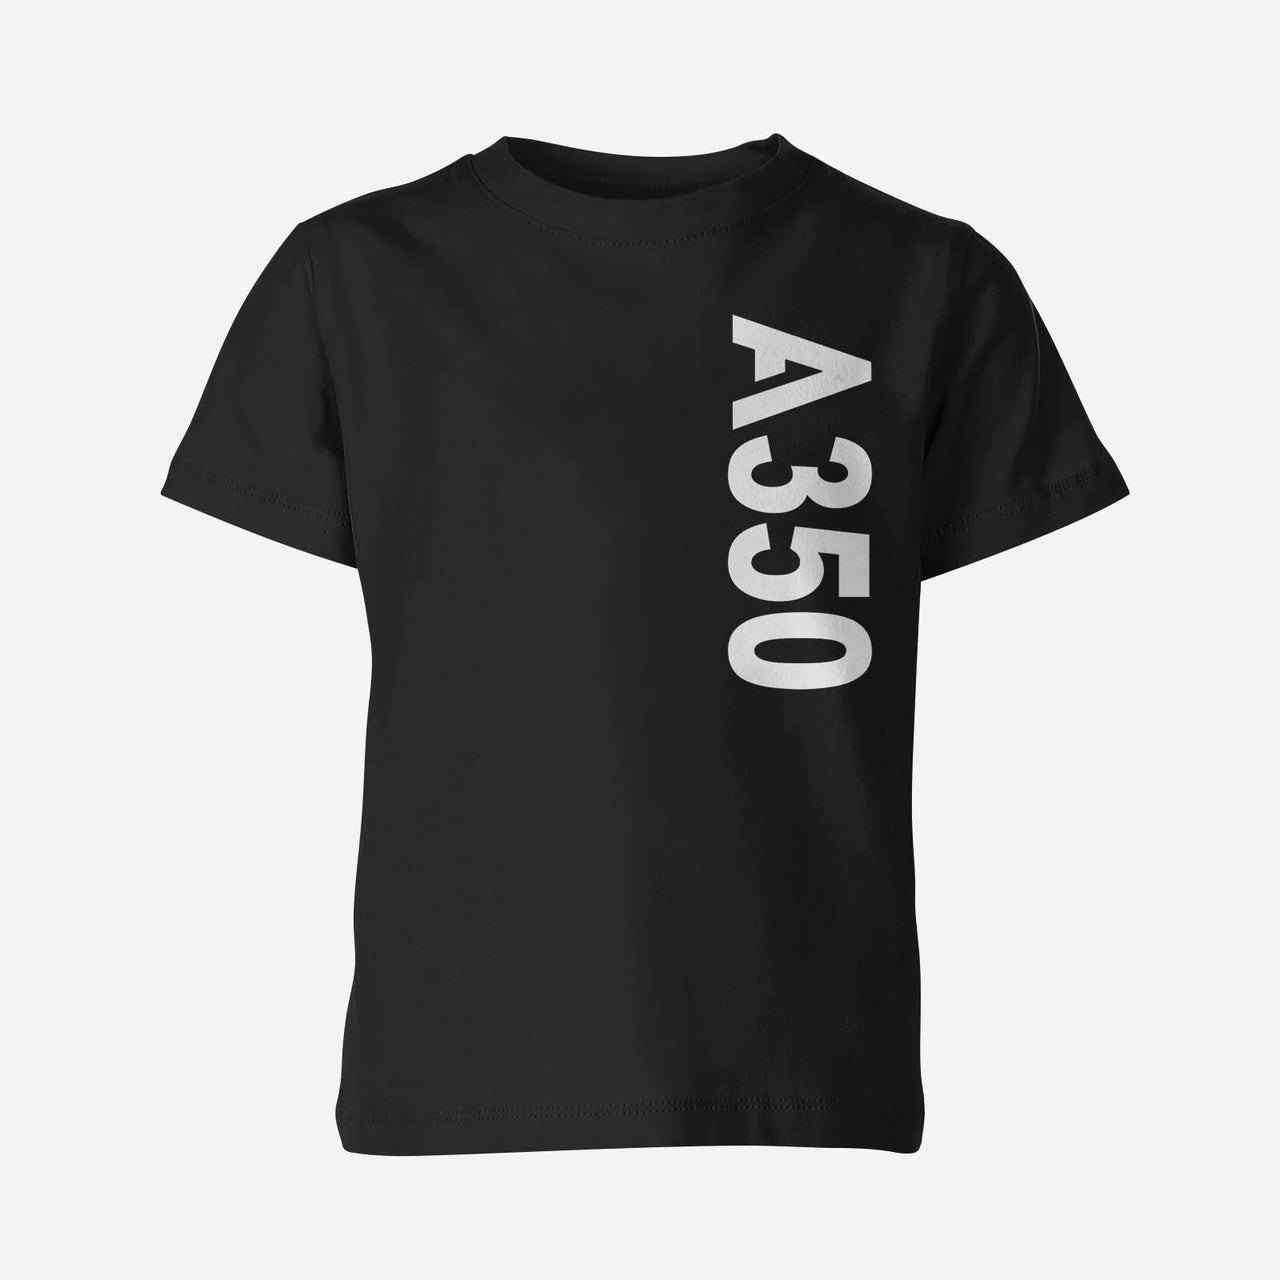 A350 Side Text Designed Children T-Shirts